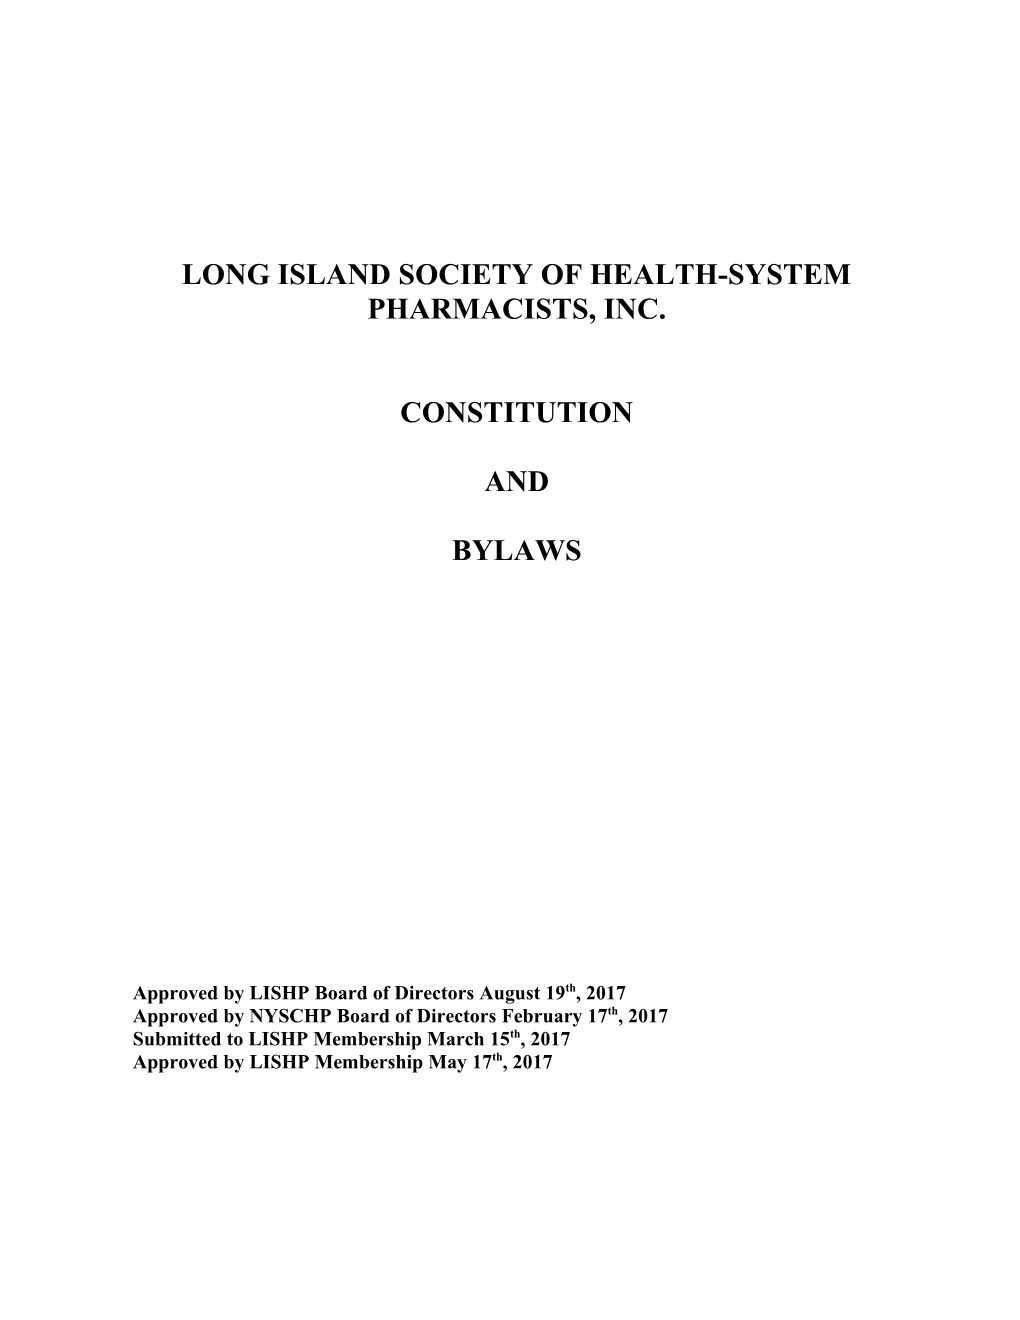 Long Island Society of Health-System Pharmacists, Inc